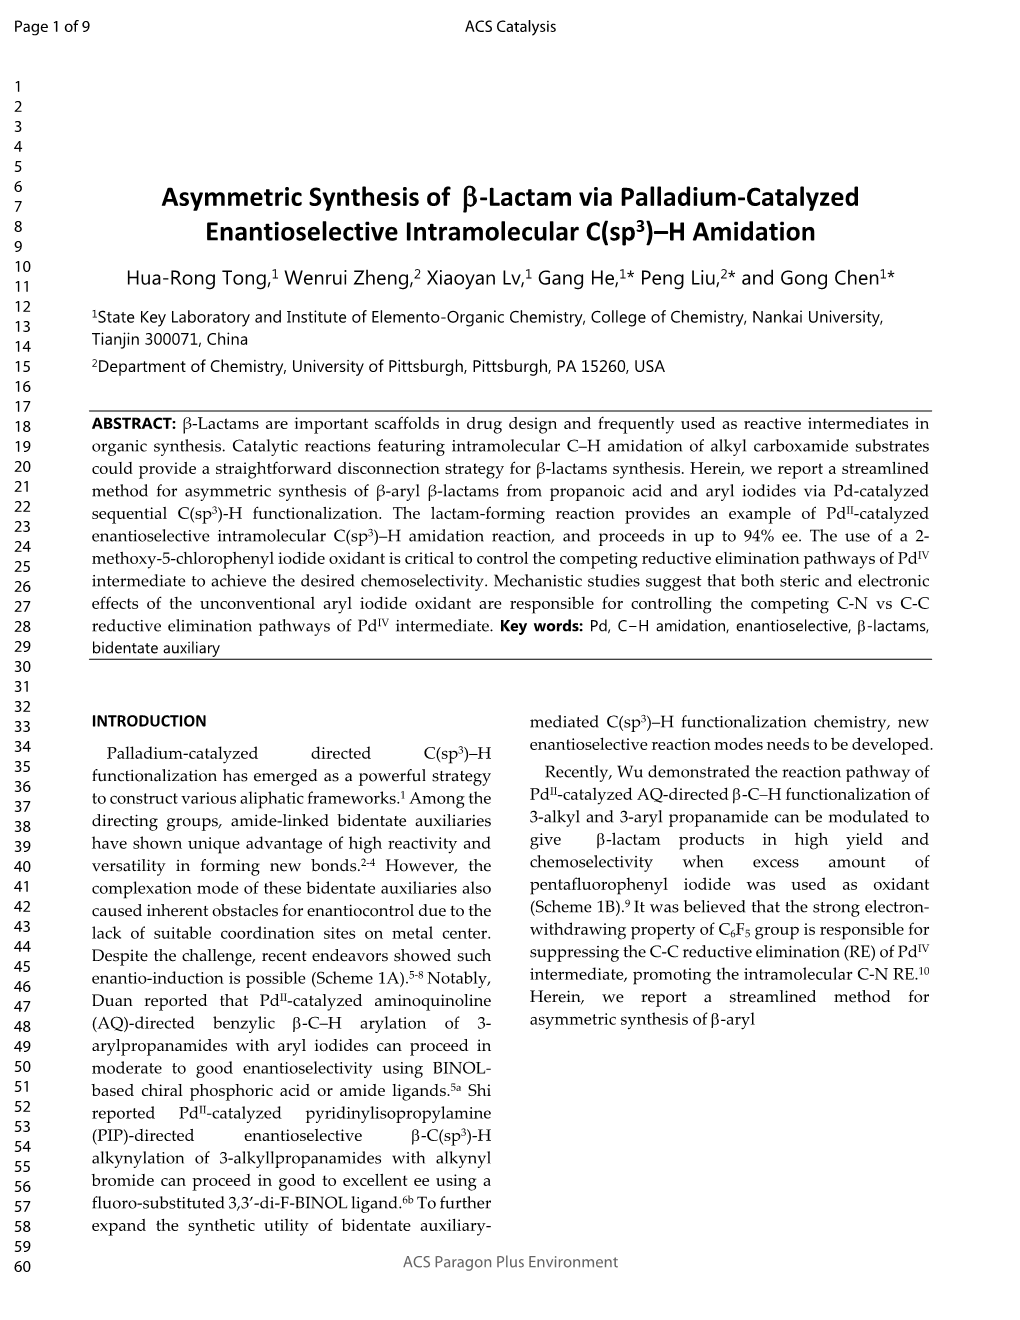 Asymmetric Synthesis of Β-Lactam Via Palladium-Catalyzed